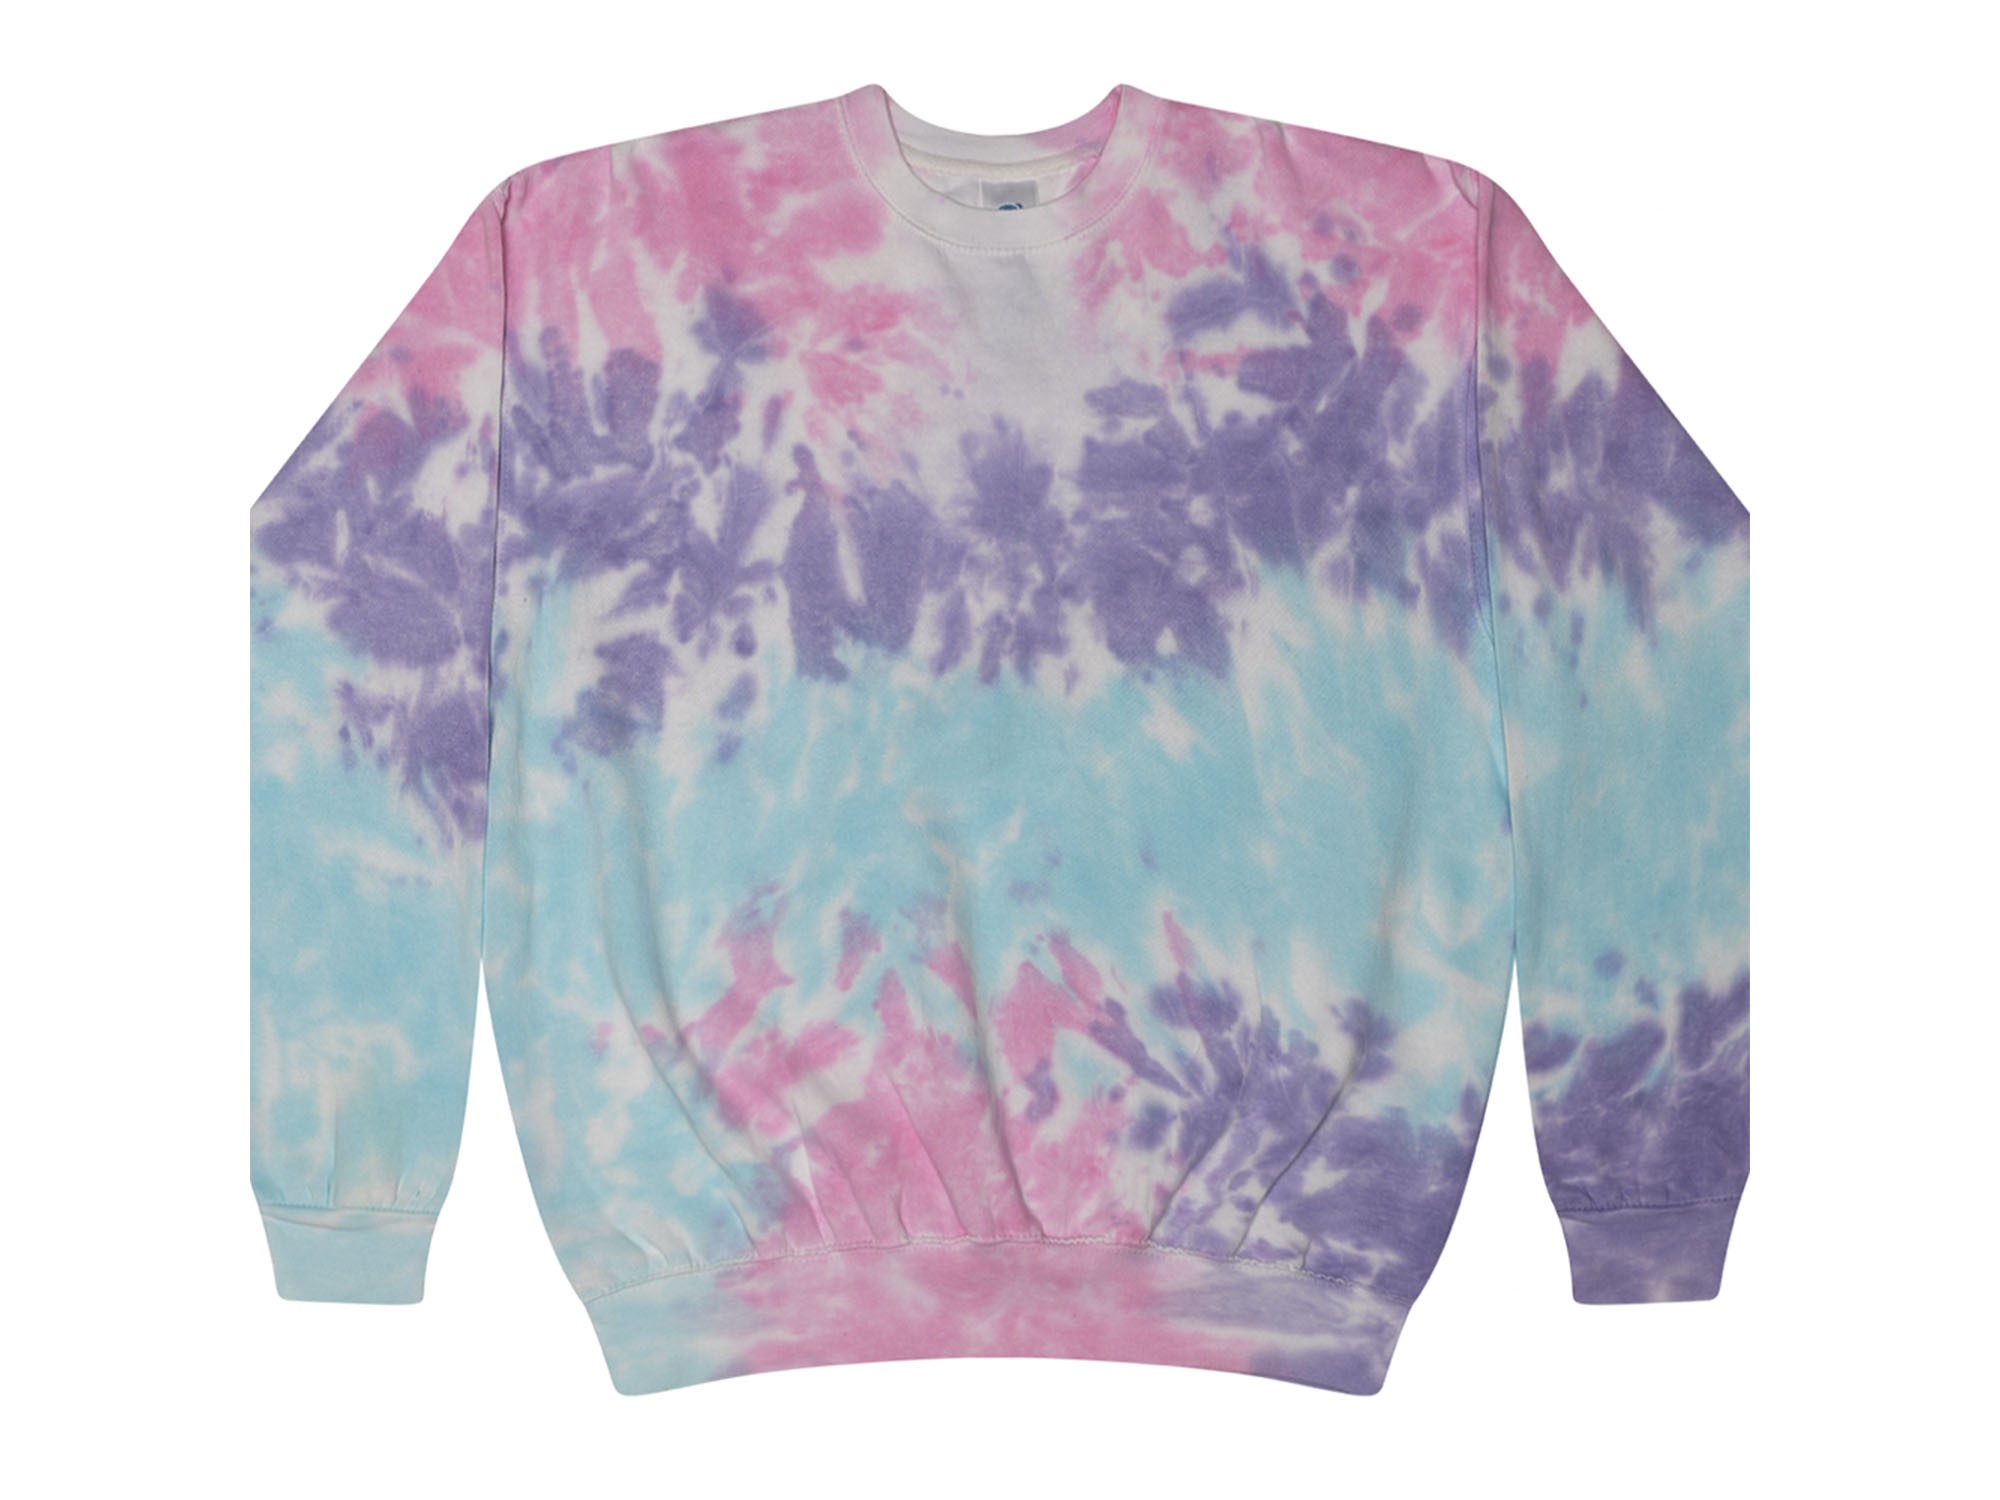 Cotton Candy Tie-Dye Crewneck Sweatshirt Adult - Tie Dye Space